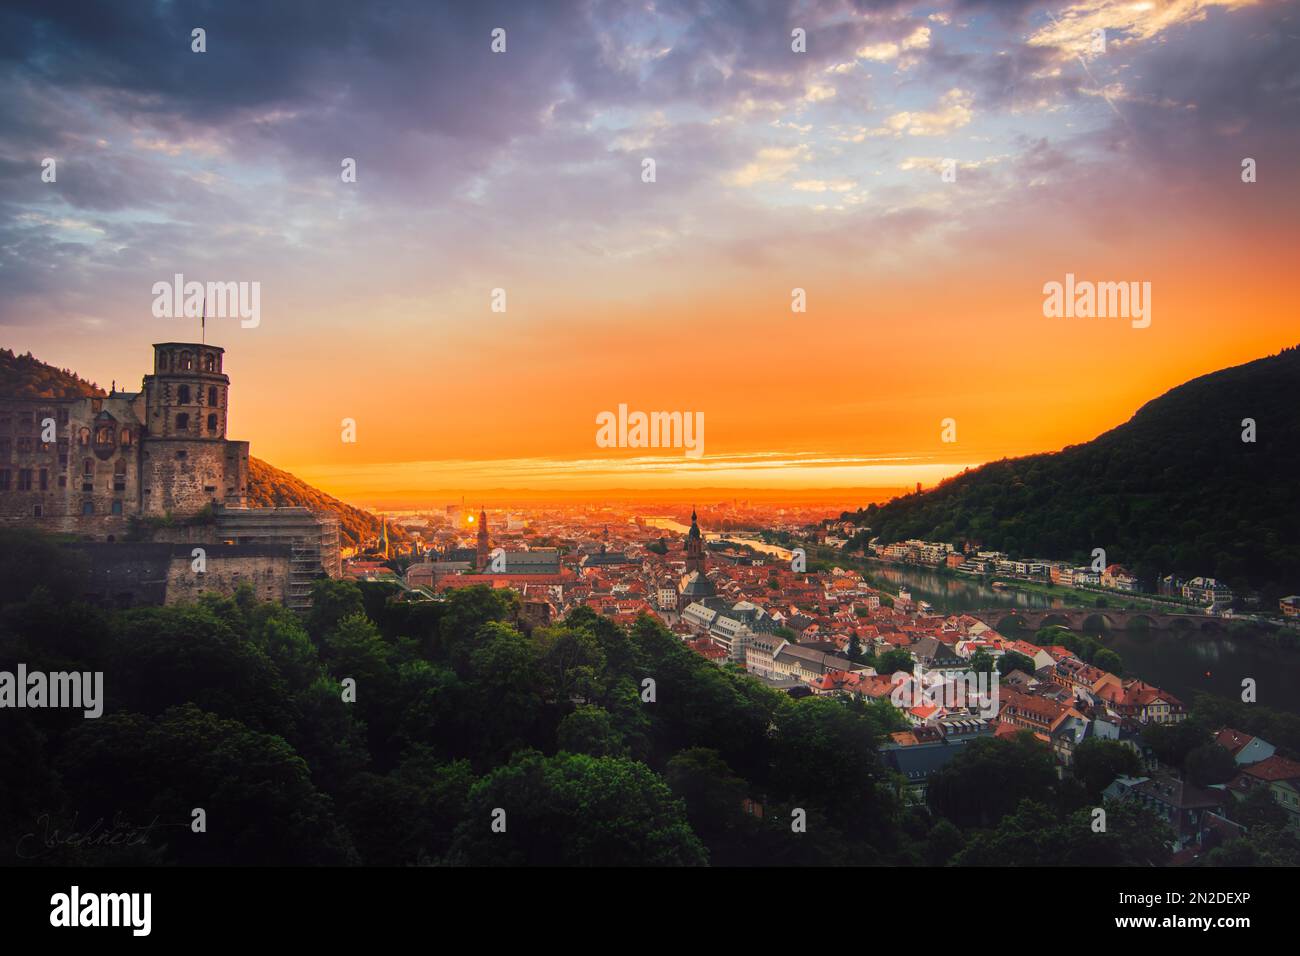 City view with Heidelberg Castle, castle ruins, sunset, backlight shot, Heidelberg, Baden-Wuerttemberg, Germany Stock Photo